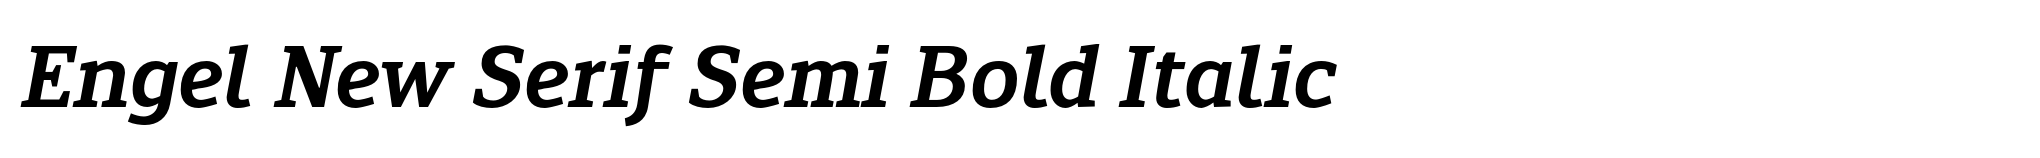 Engel New Serif Semi Bold Italic image